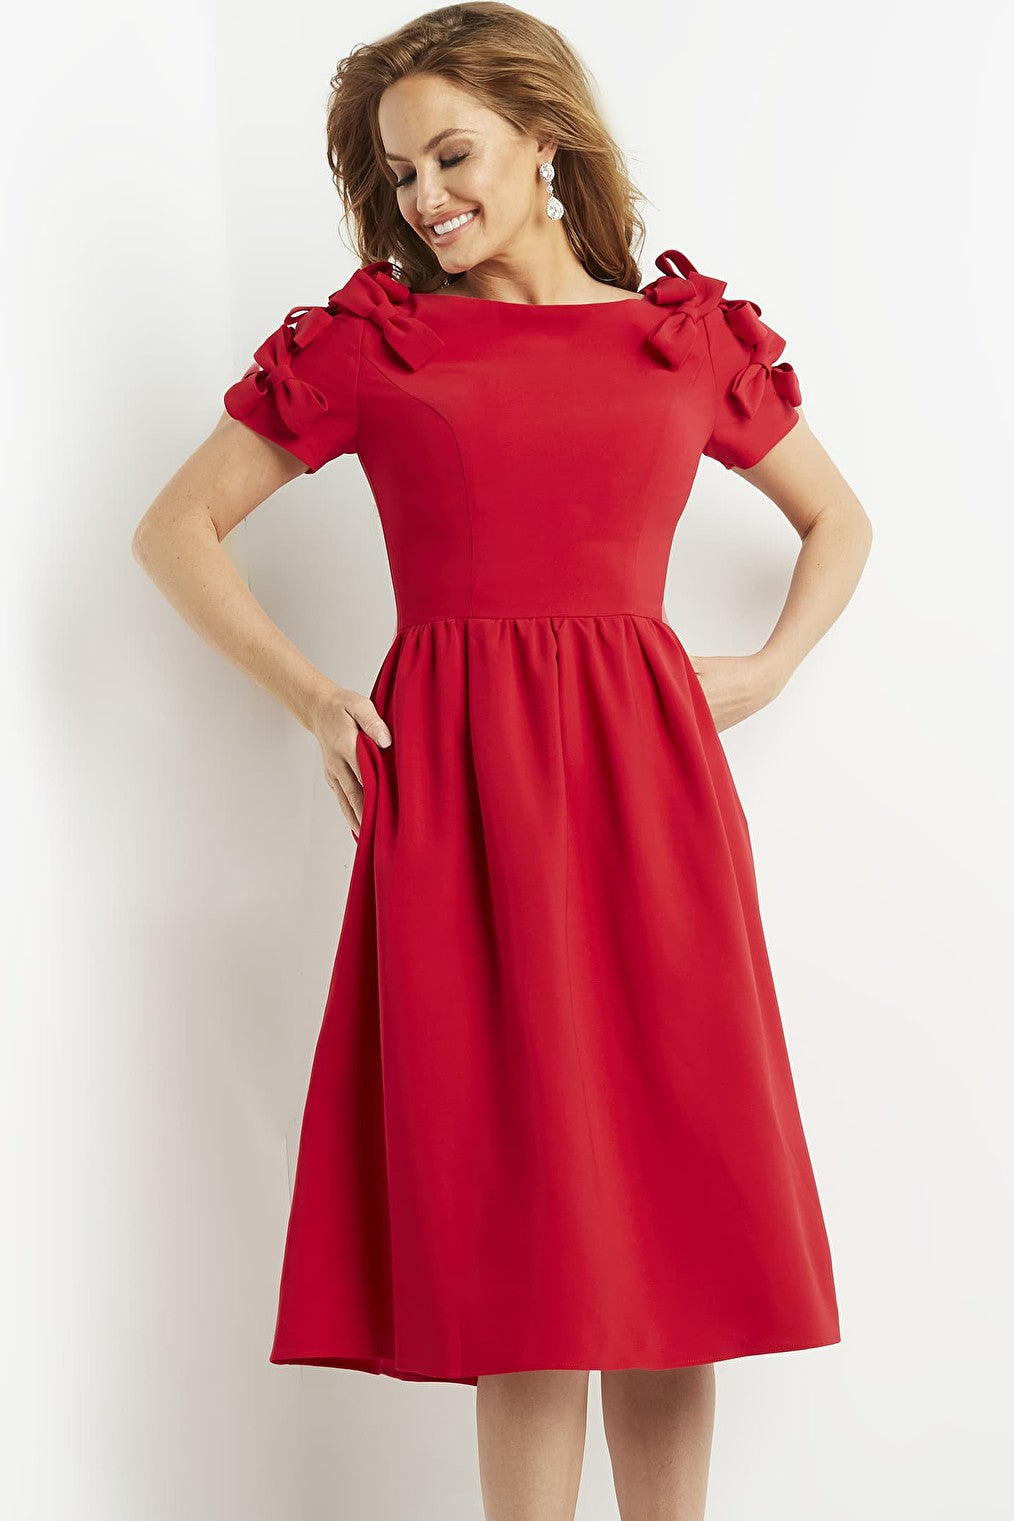 red short dress 07012